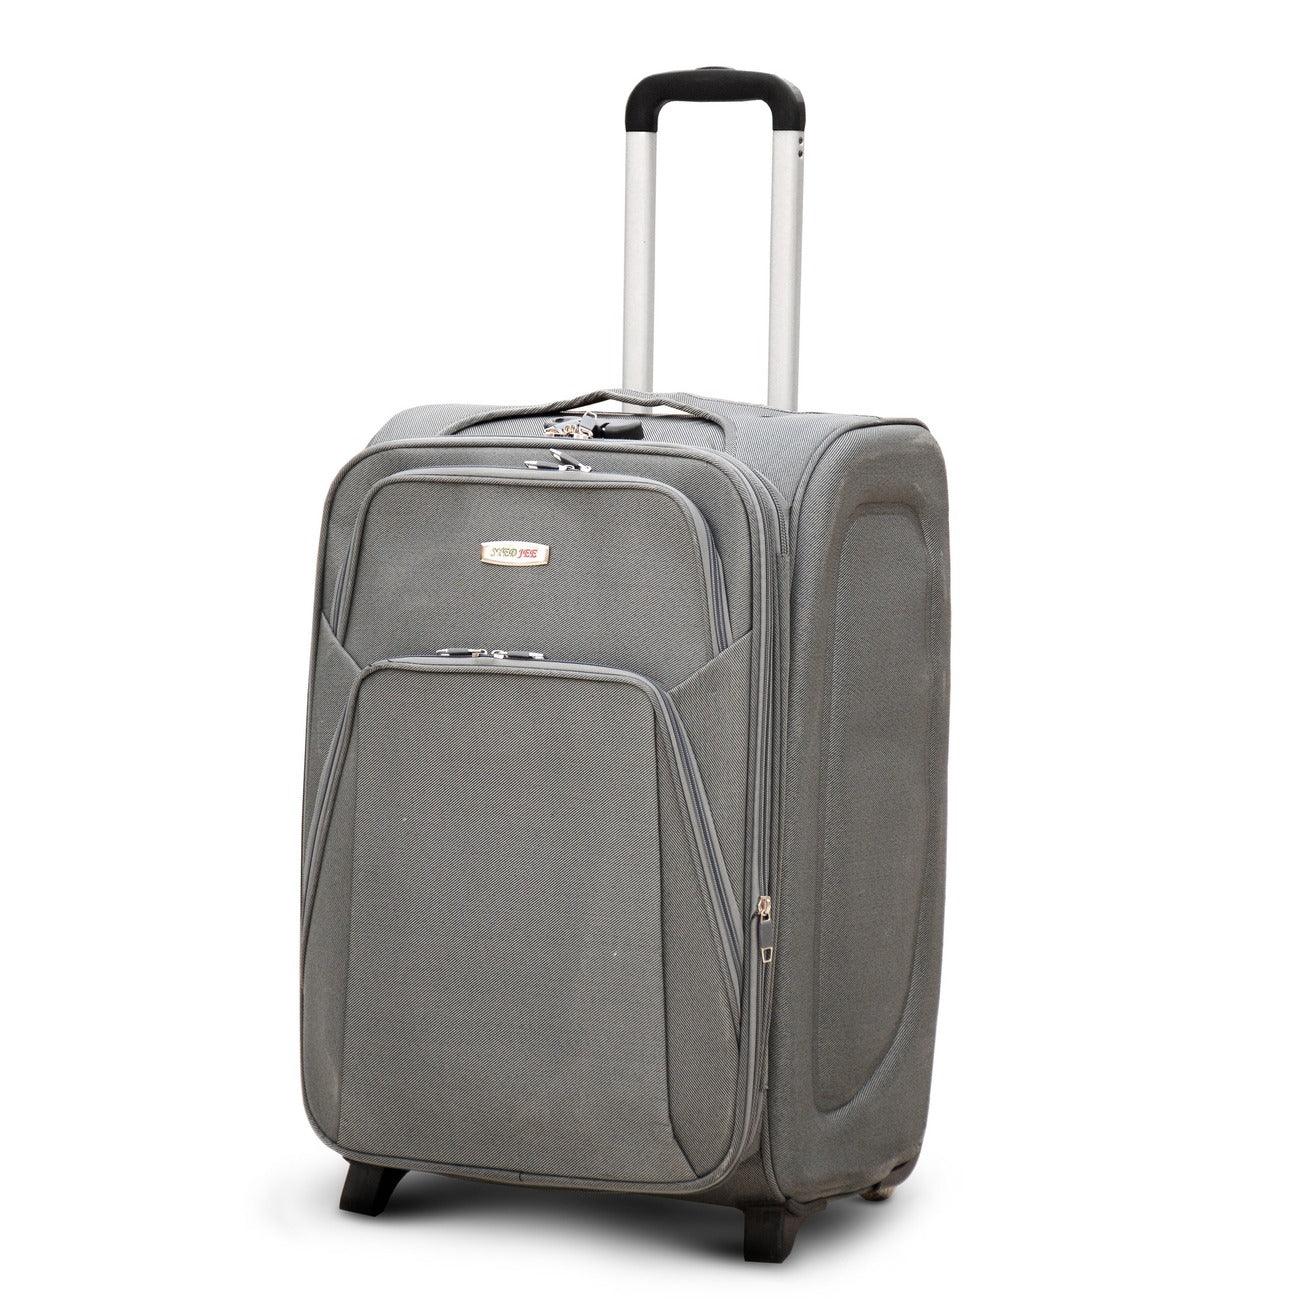 20" SJ JIAN 2 Wheel Lightweight Soft Material Carry On Luggage Bag Zaappy